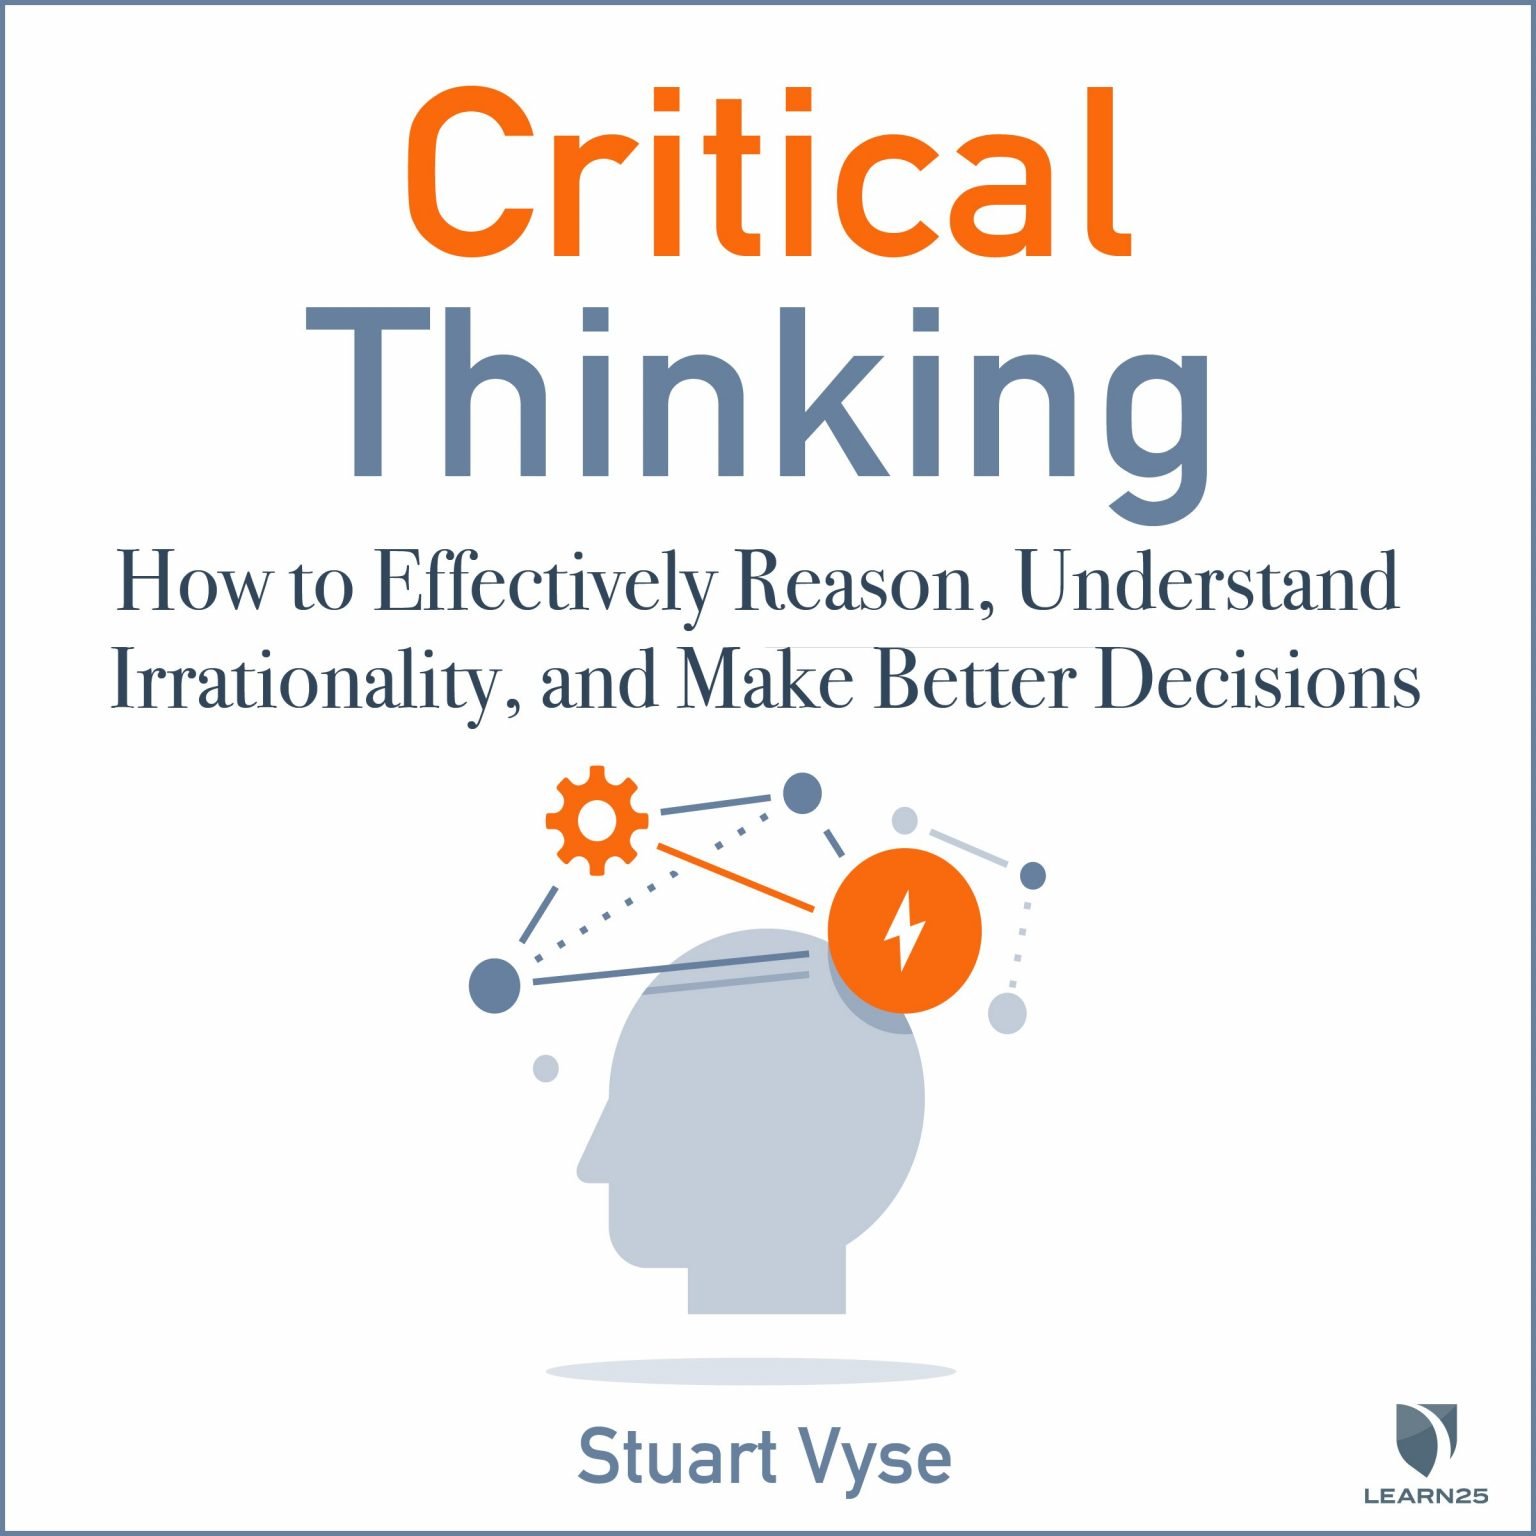 pdf on critical thinking